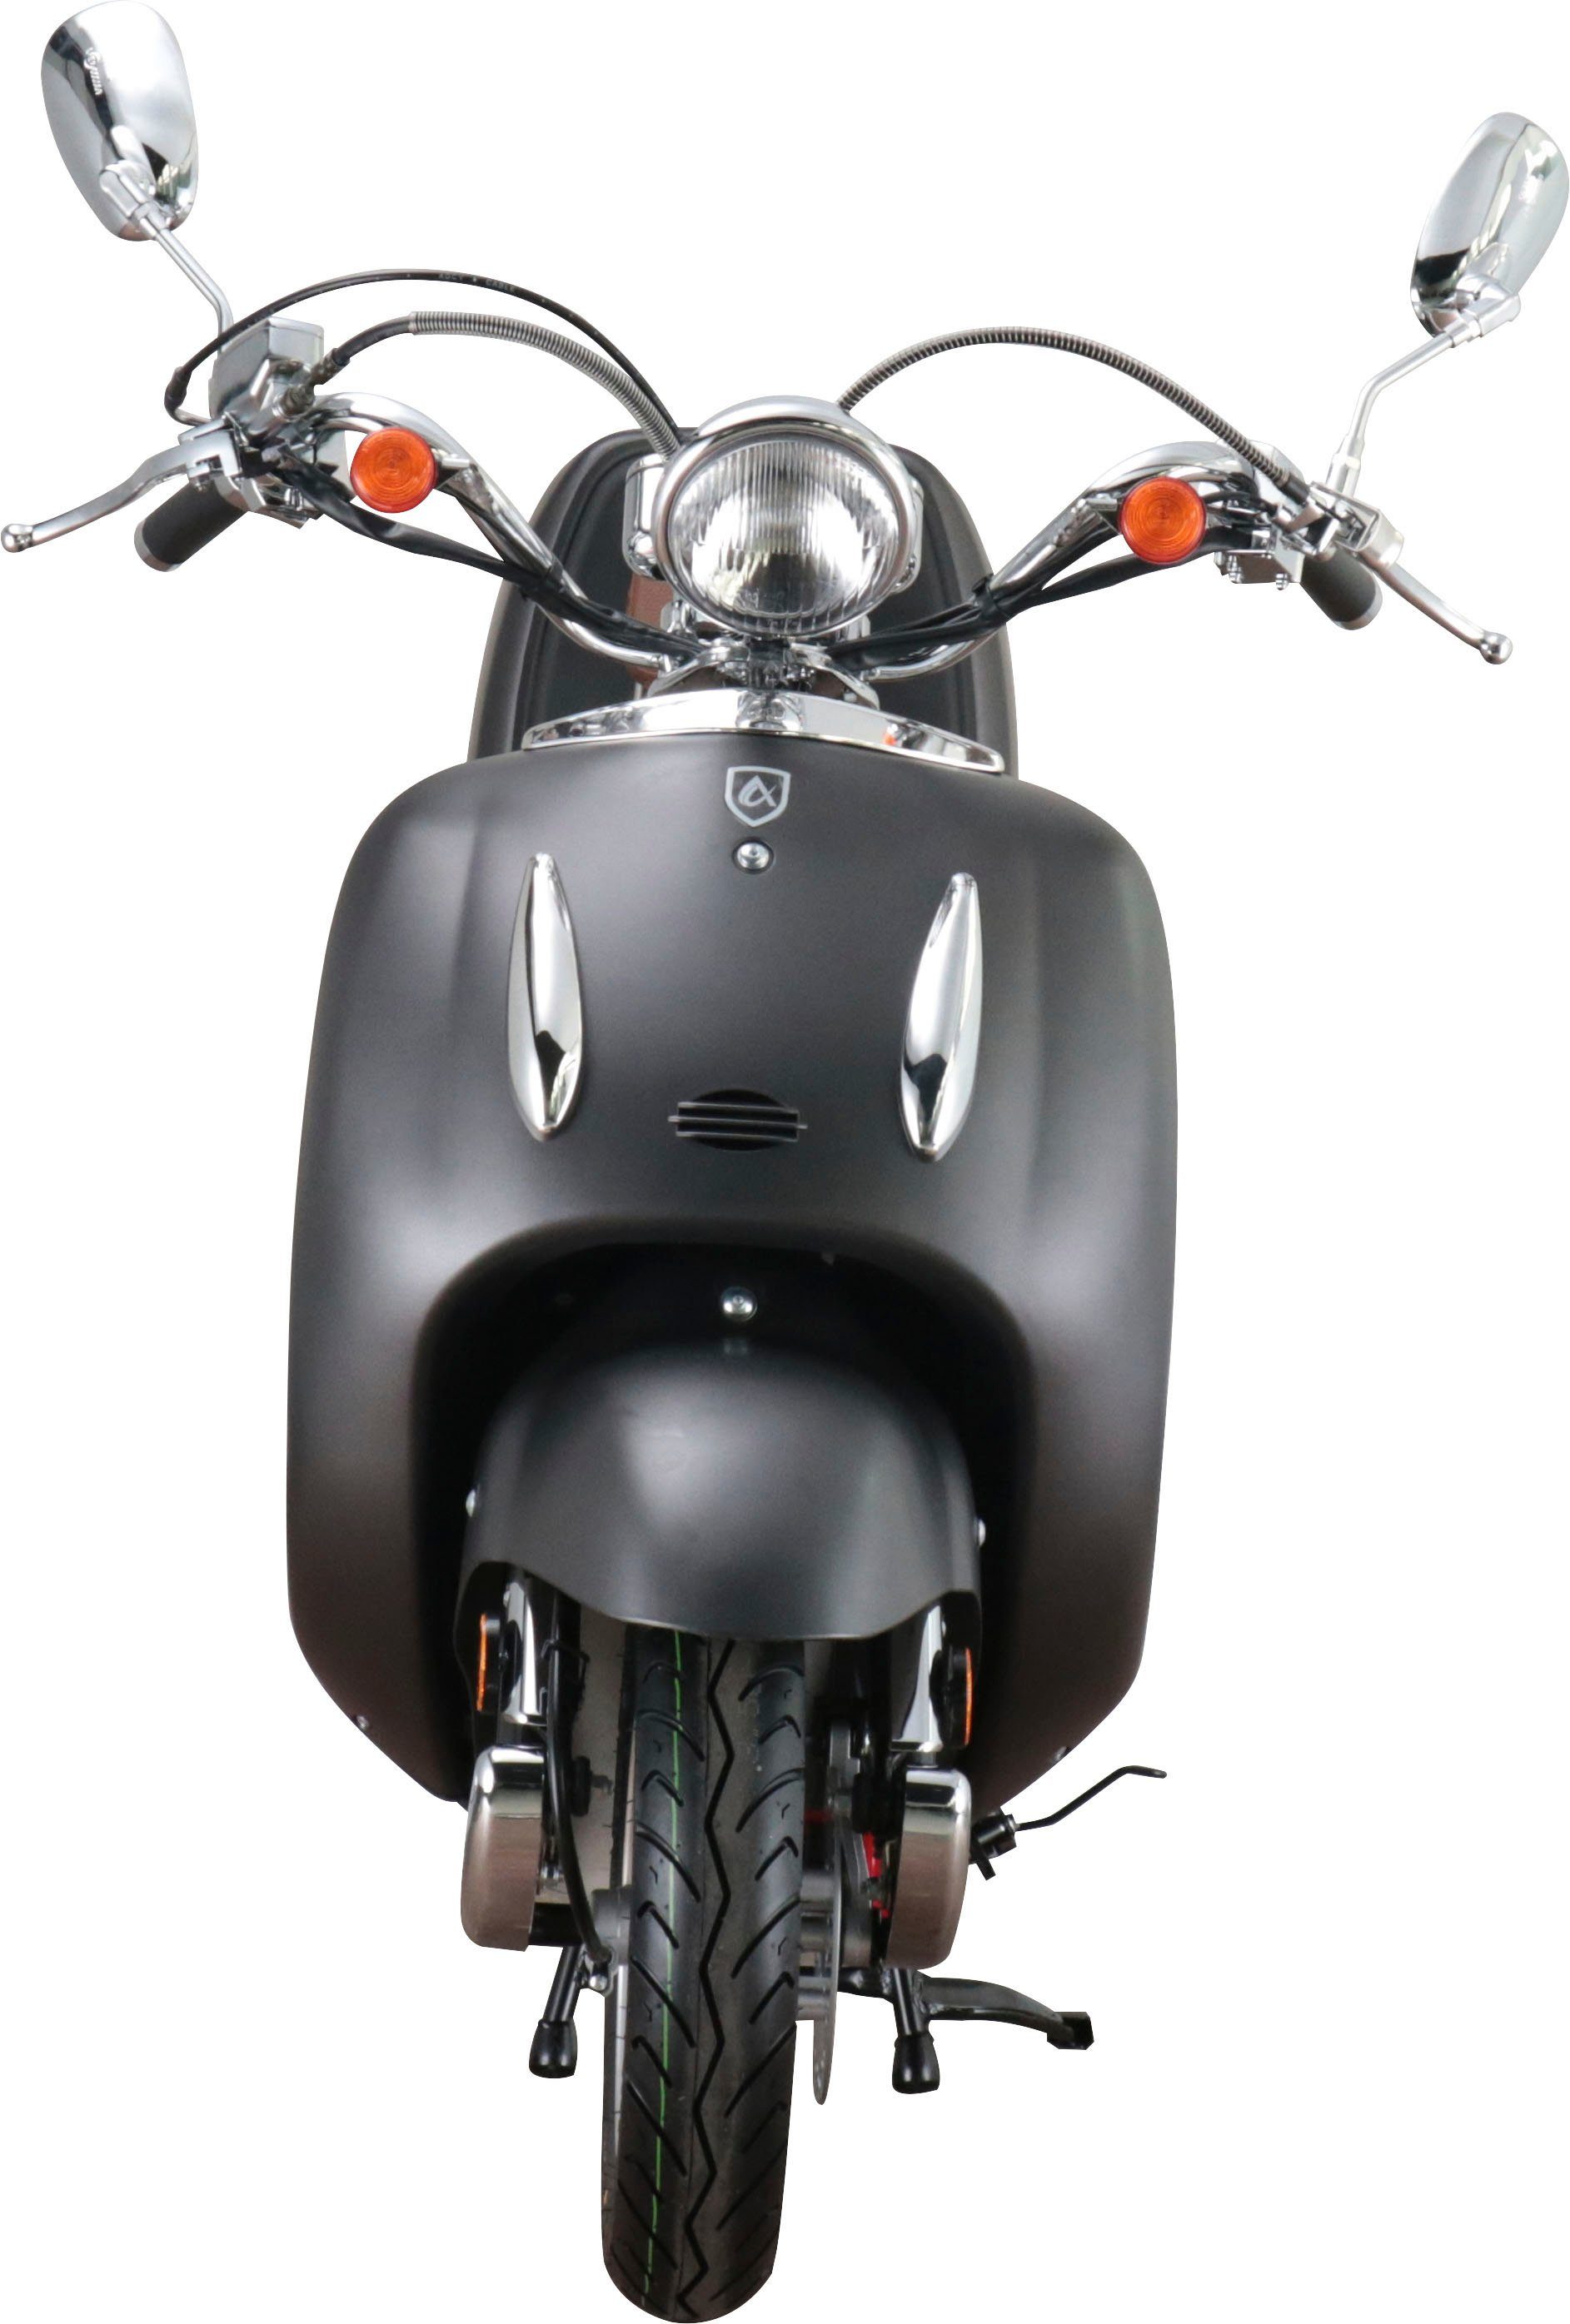 ccm, Topcase Firenze, km/h, | Euro 50 Alpha inkl. braun 5, mattschwarz Motorroller Motors Retro 45